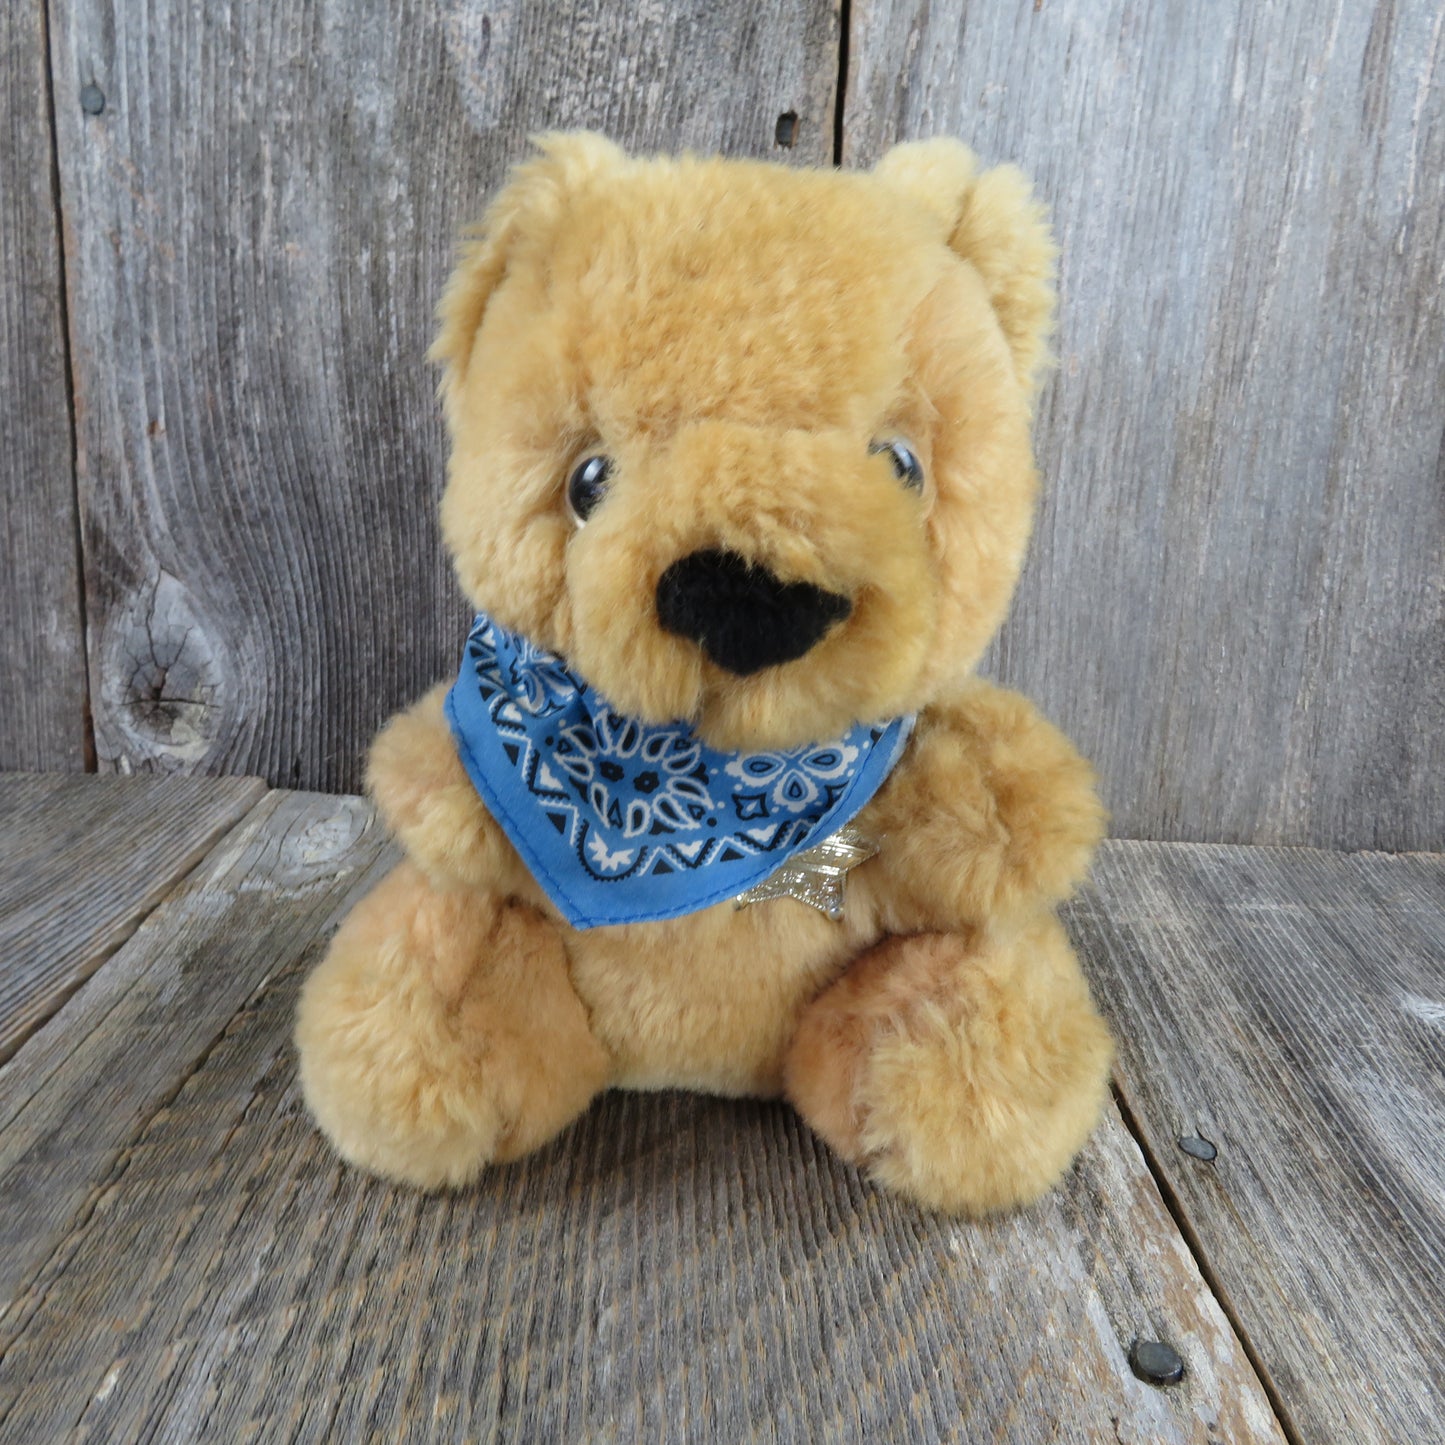 Vintage Teddy Bear Sheriff Plush Avon Beariff Stuffed Animal Blue Bandanna 1986 - At Grandma's Table